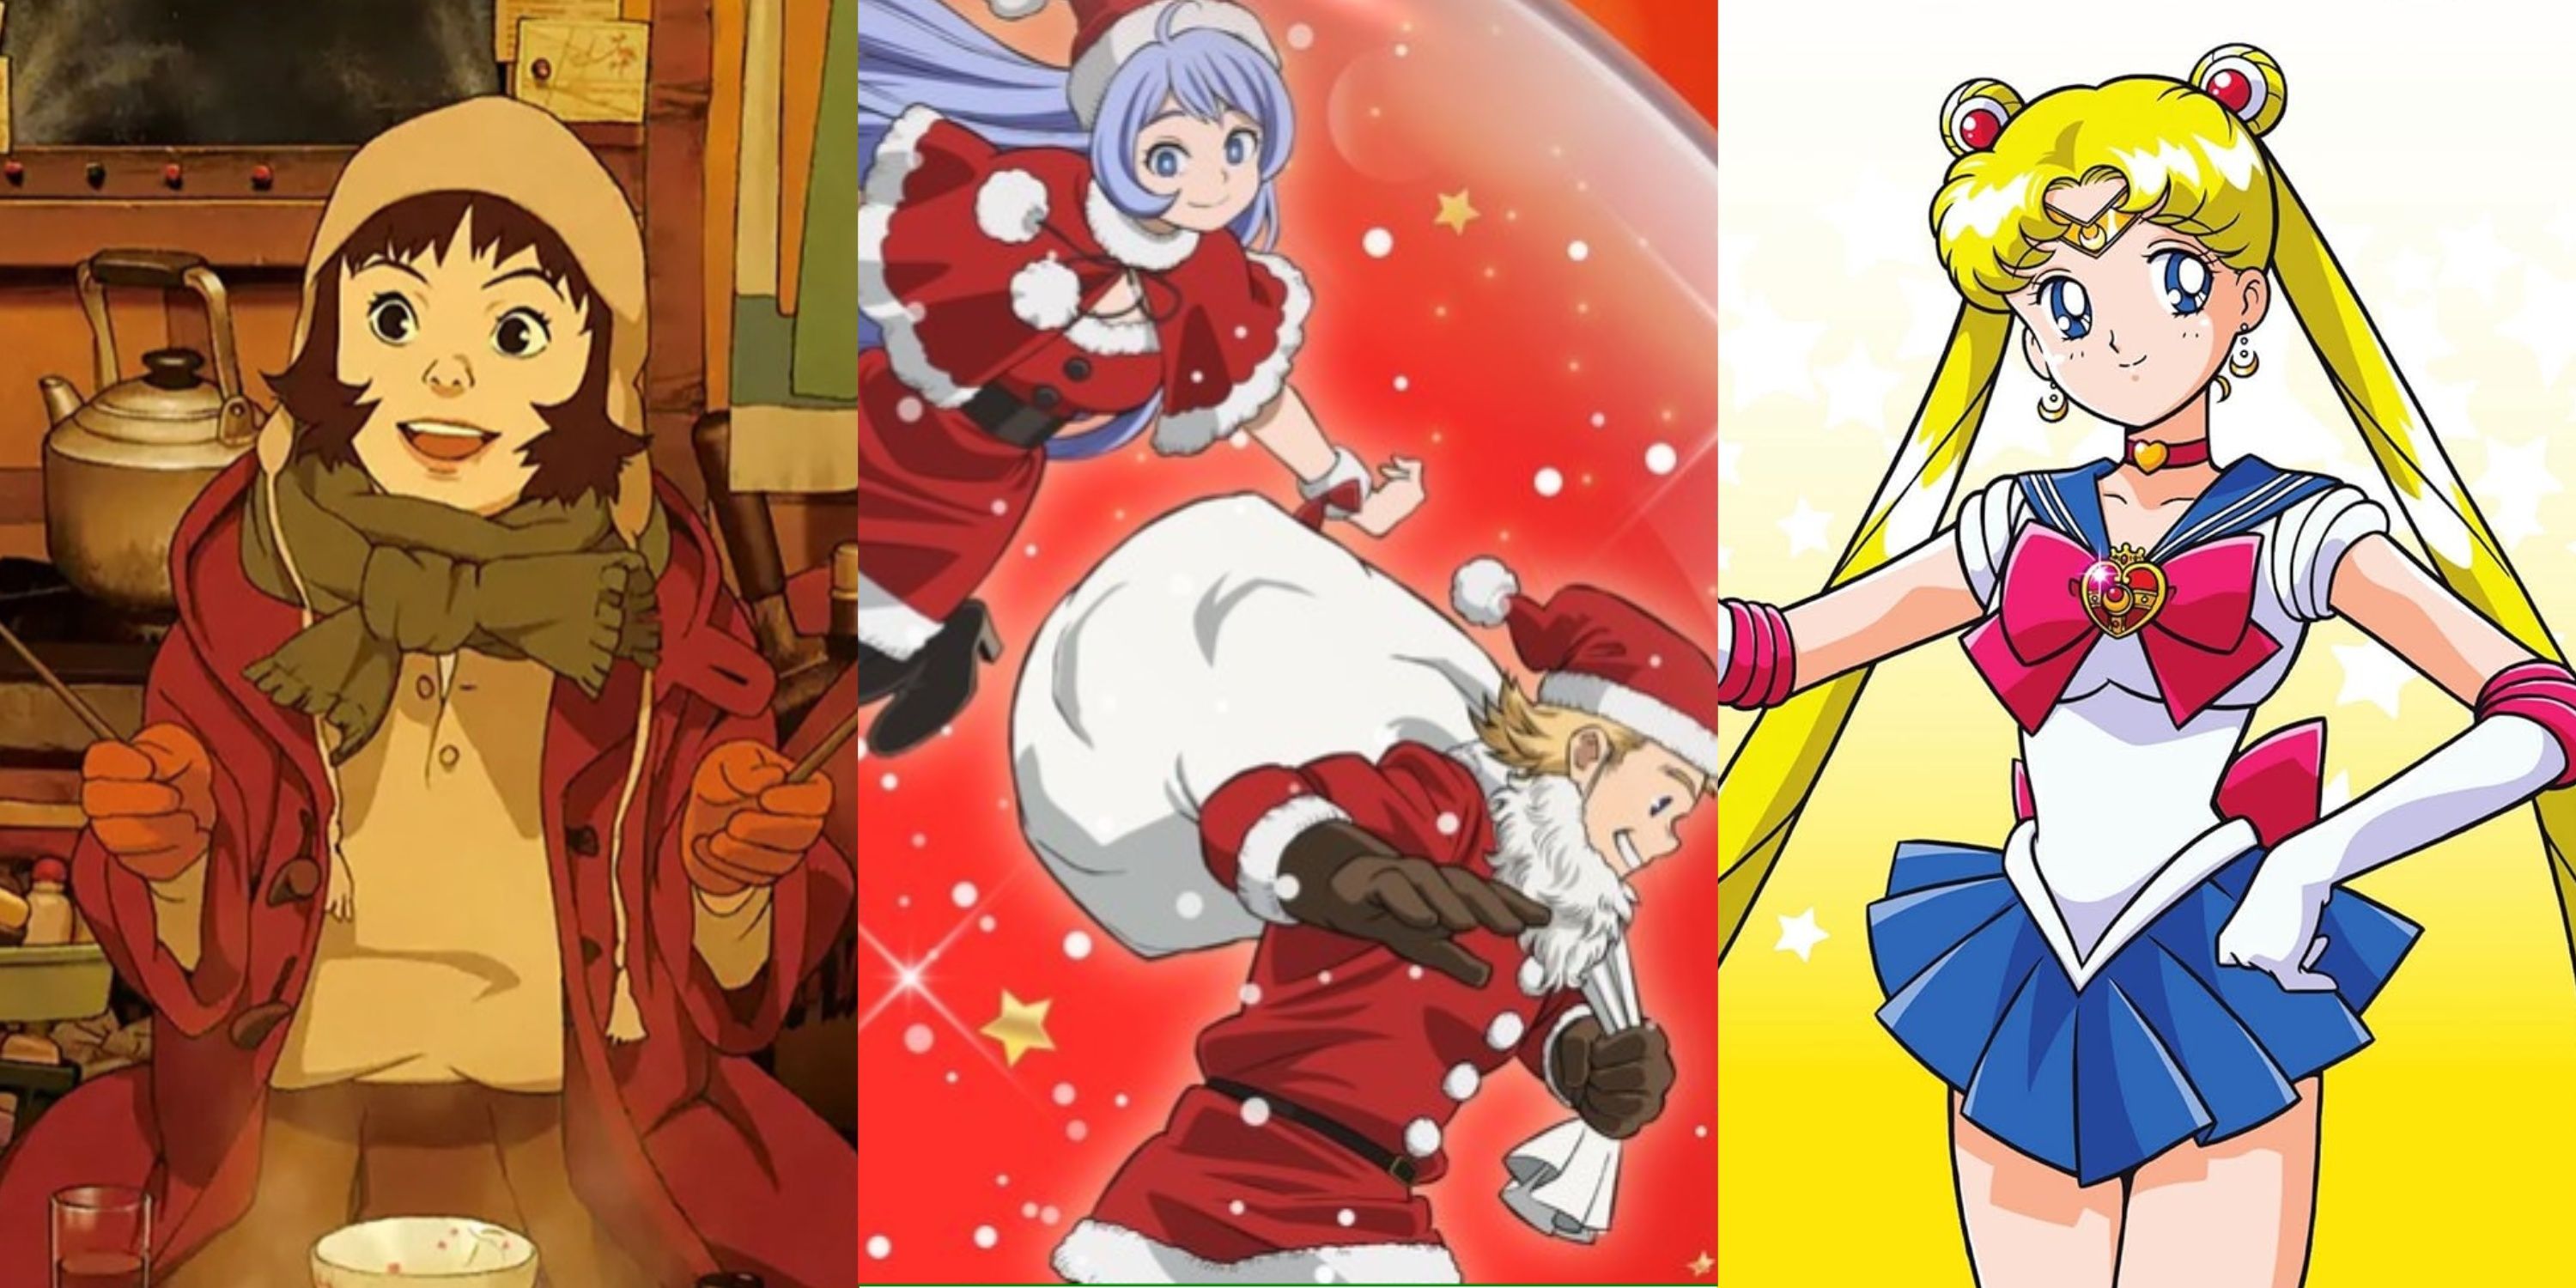 Split image of Tokyo Godfathers, the Christmas episode of My Hero Academia, and Sailor Moon S